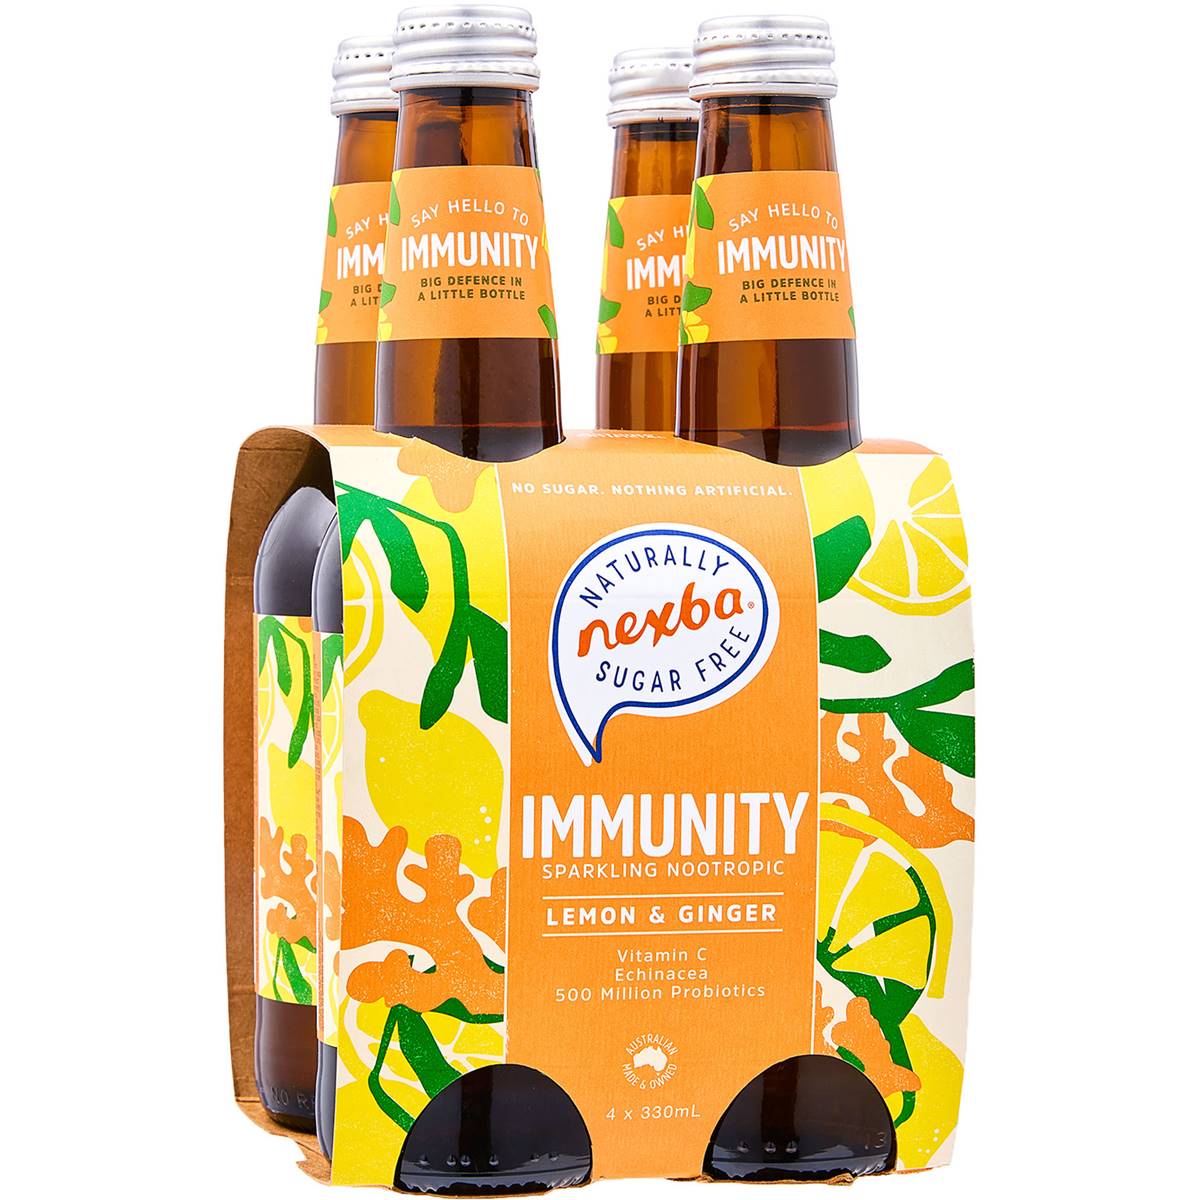 Nexba Lemon & Ginger Immunity Naturally Sugar Free Nootropic 330ml  4pk